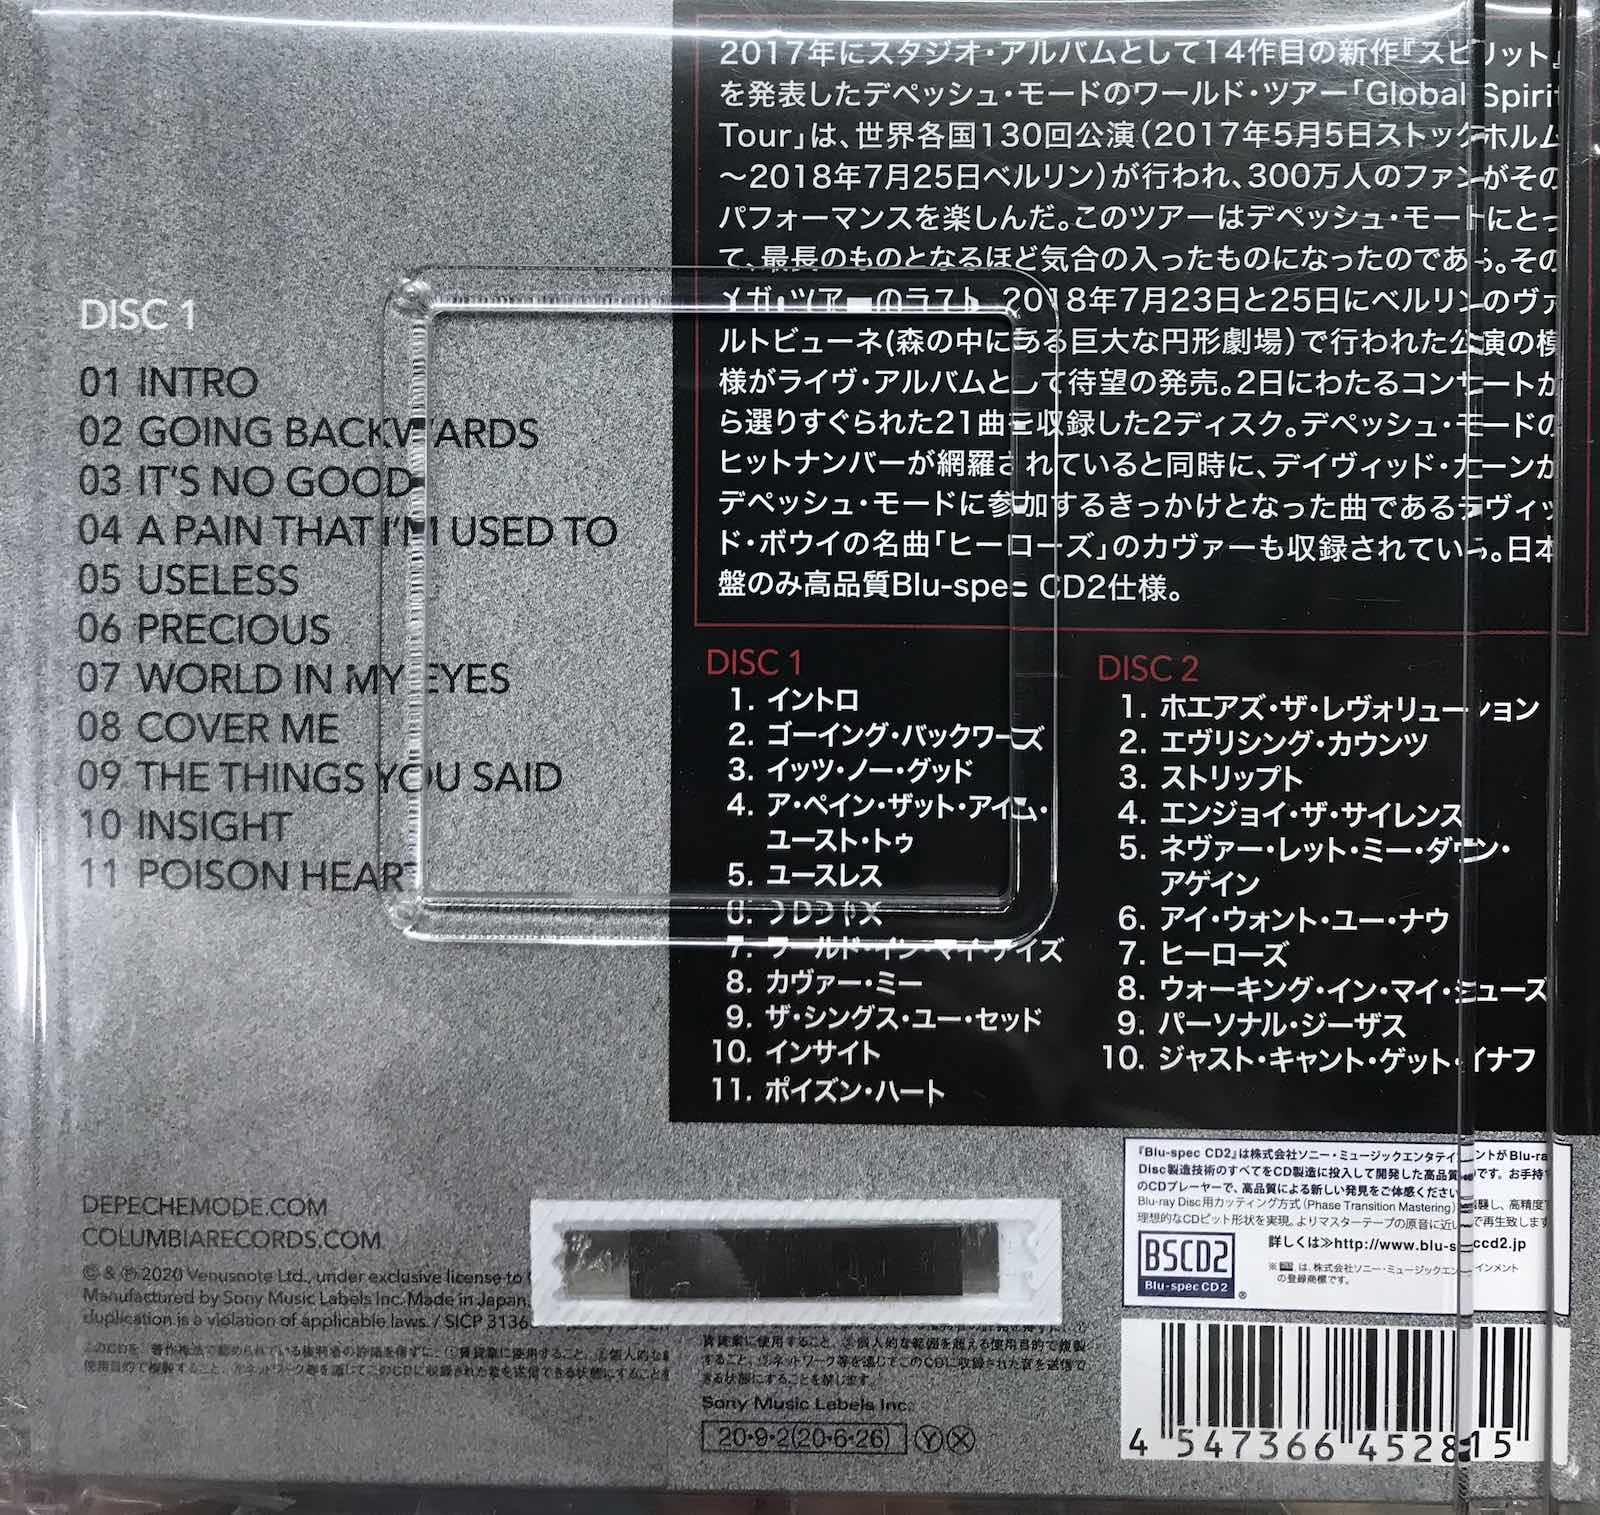 Depeche Mode ‎– Live Spirits Soundtrack